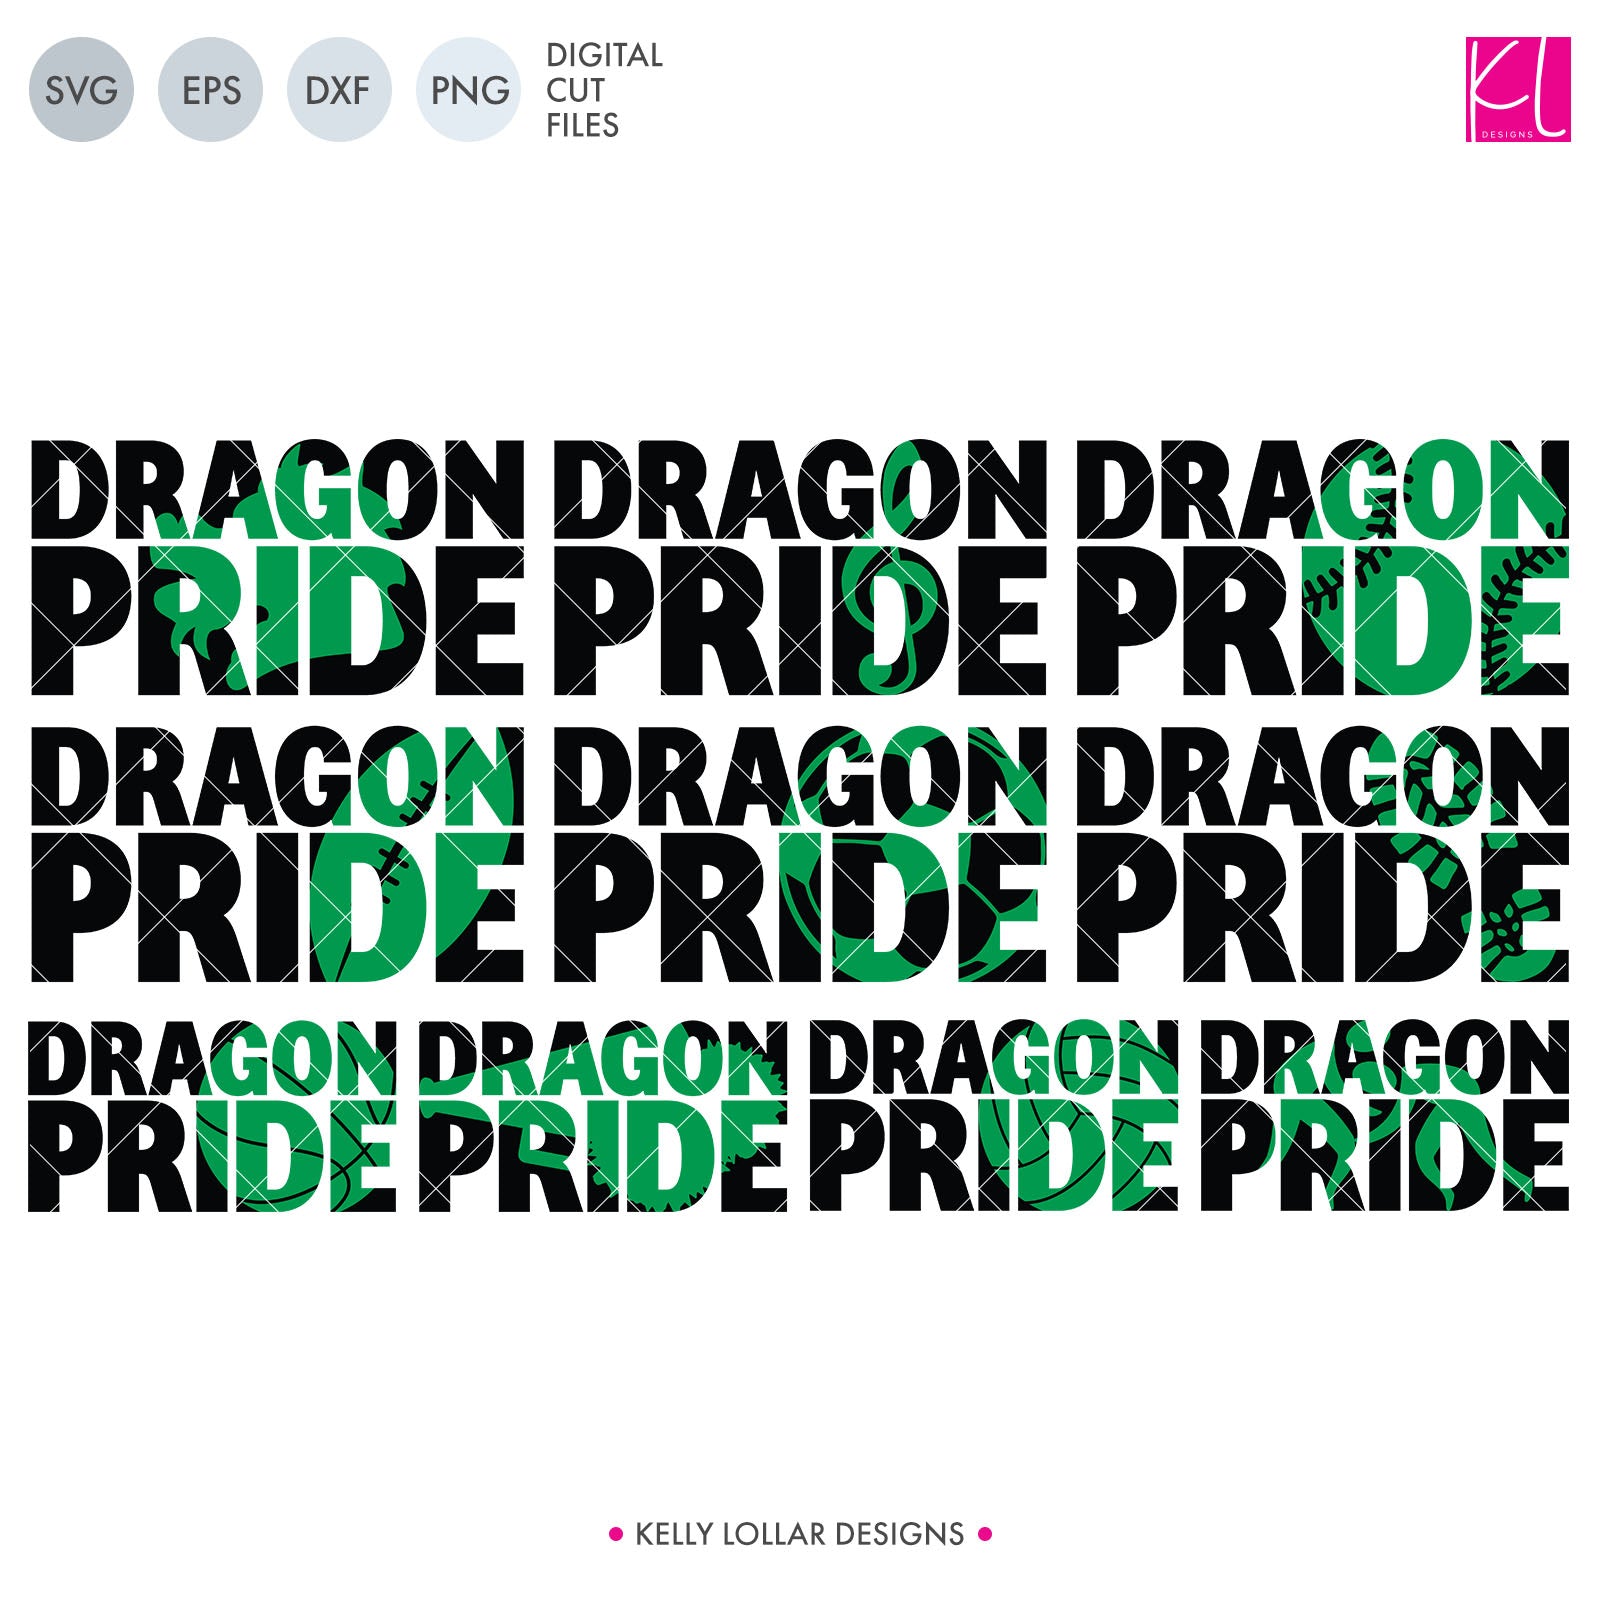 Download Dragons Mascot Bundle Svg Dxf Eps Png Cut Files Kelly Lollar Designs